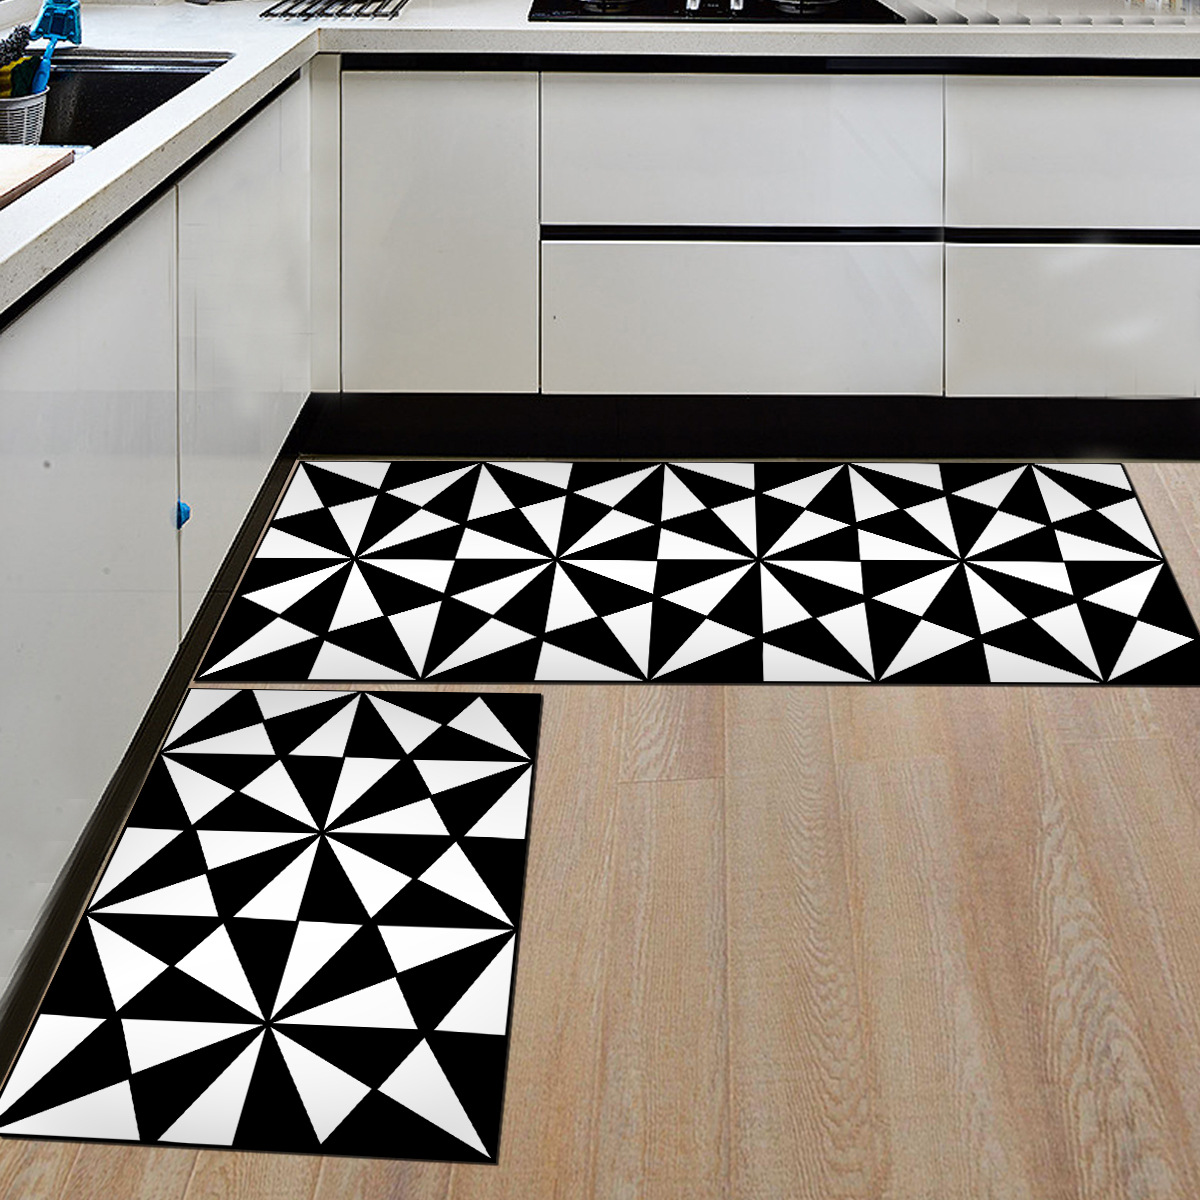 

2pcs/set Black And White Flannel Floor Mats For Kitchen Anti-Slip Kids Bedroom Carpet Entrance/Hallway Area Rug, Hexagons